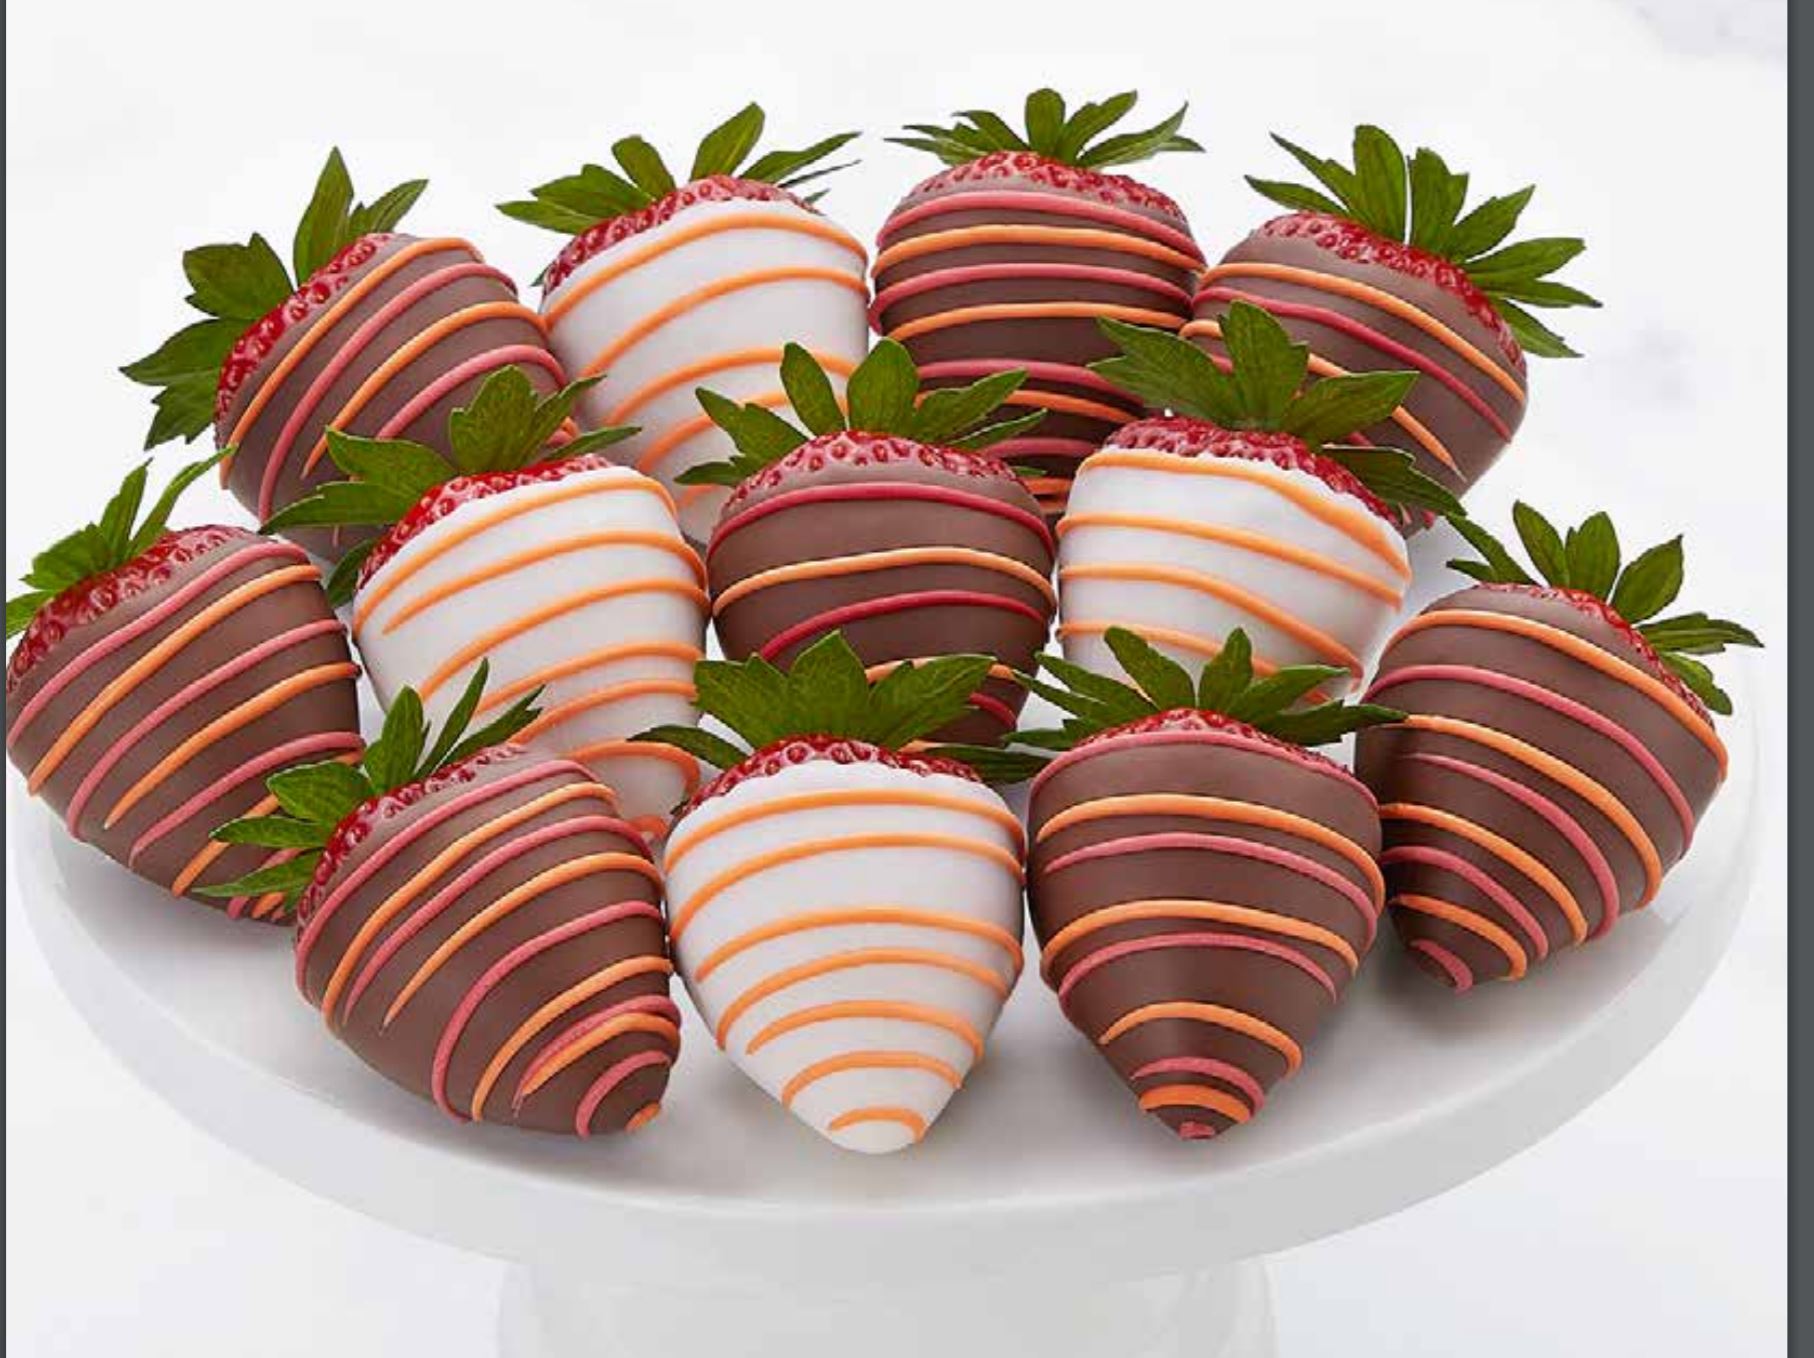  A dozen Chocolate covered strawberries 